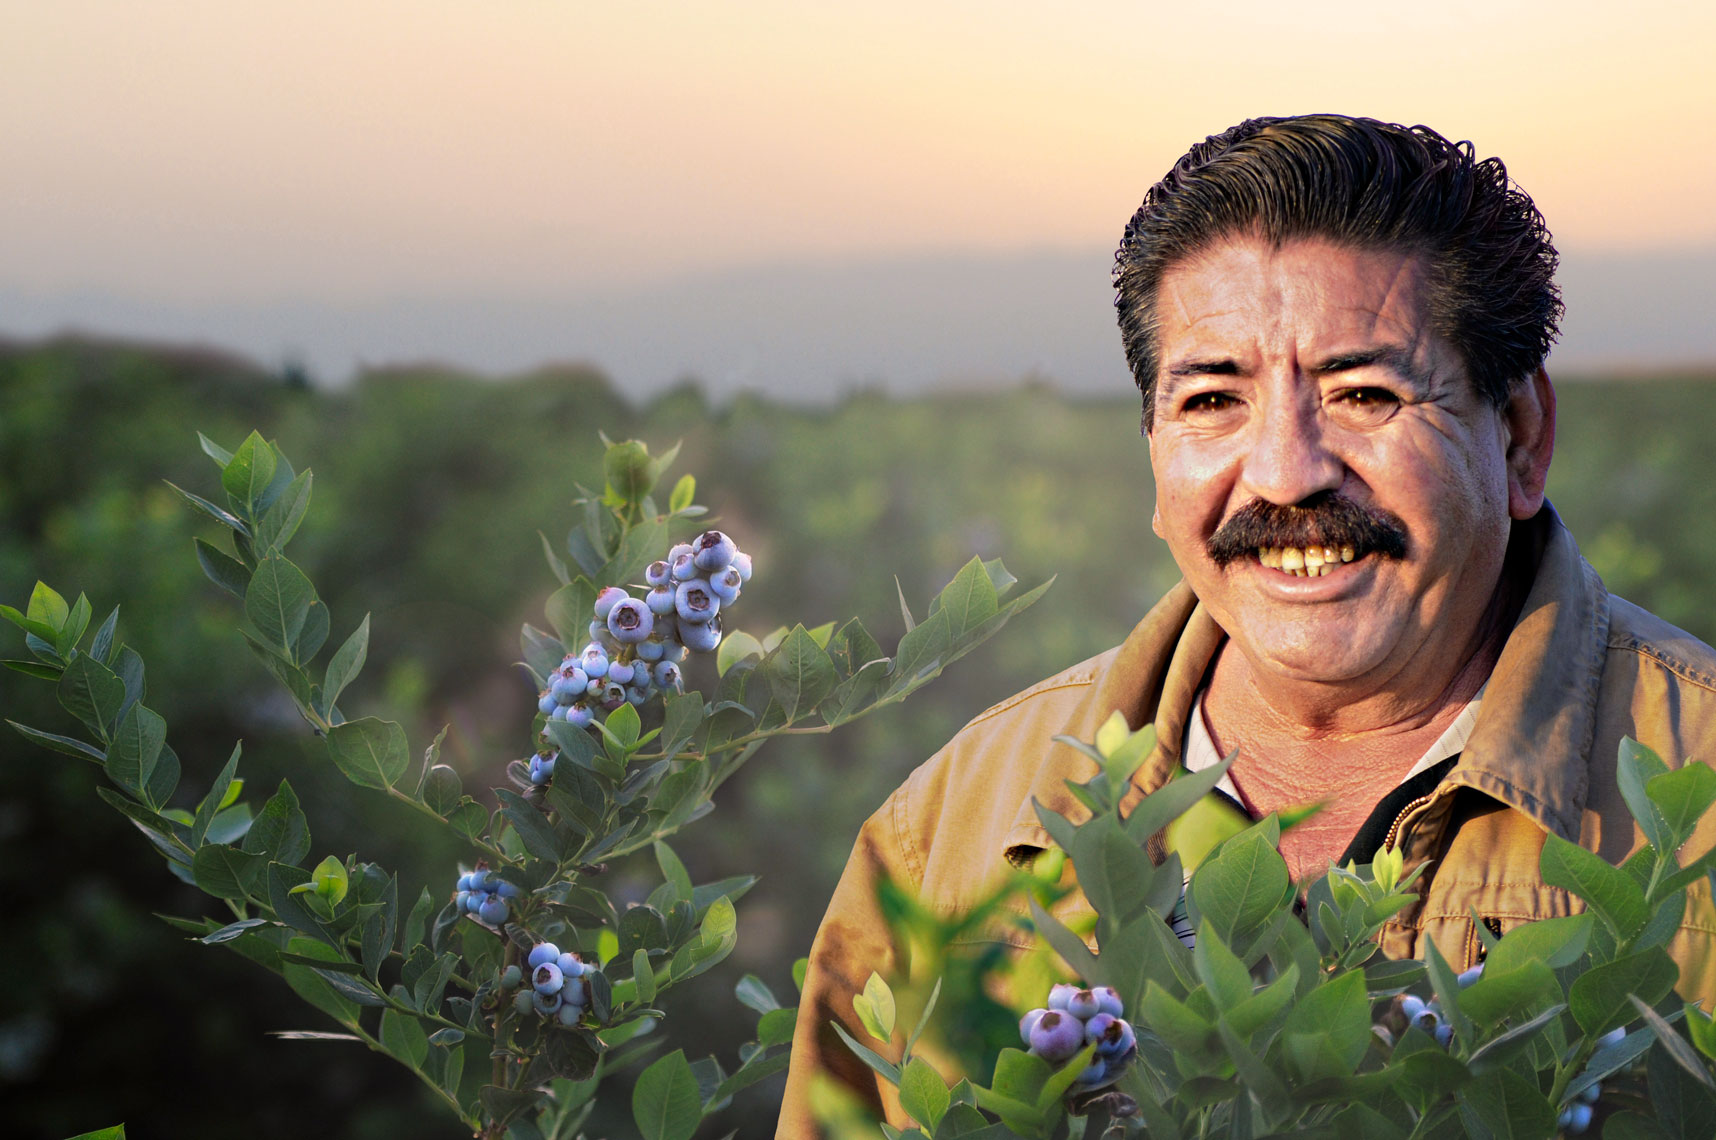 Blueberry-farmer-standing-in-a-blueberry-field-at-sunrise-in-Delano-California-by-farming-photographer-Joe-Atlas..